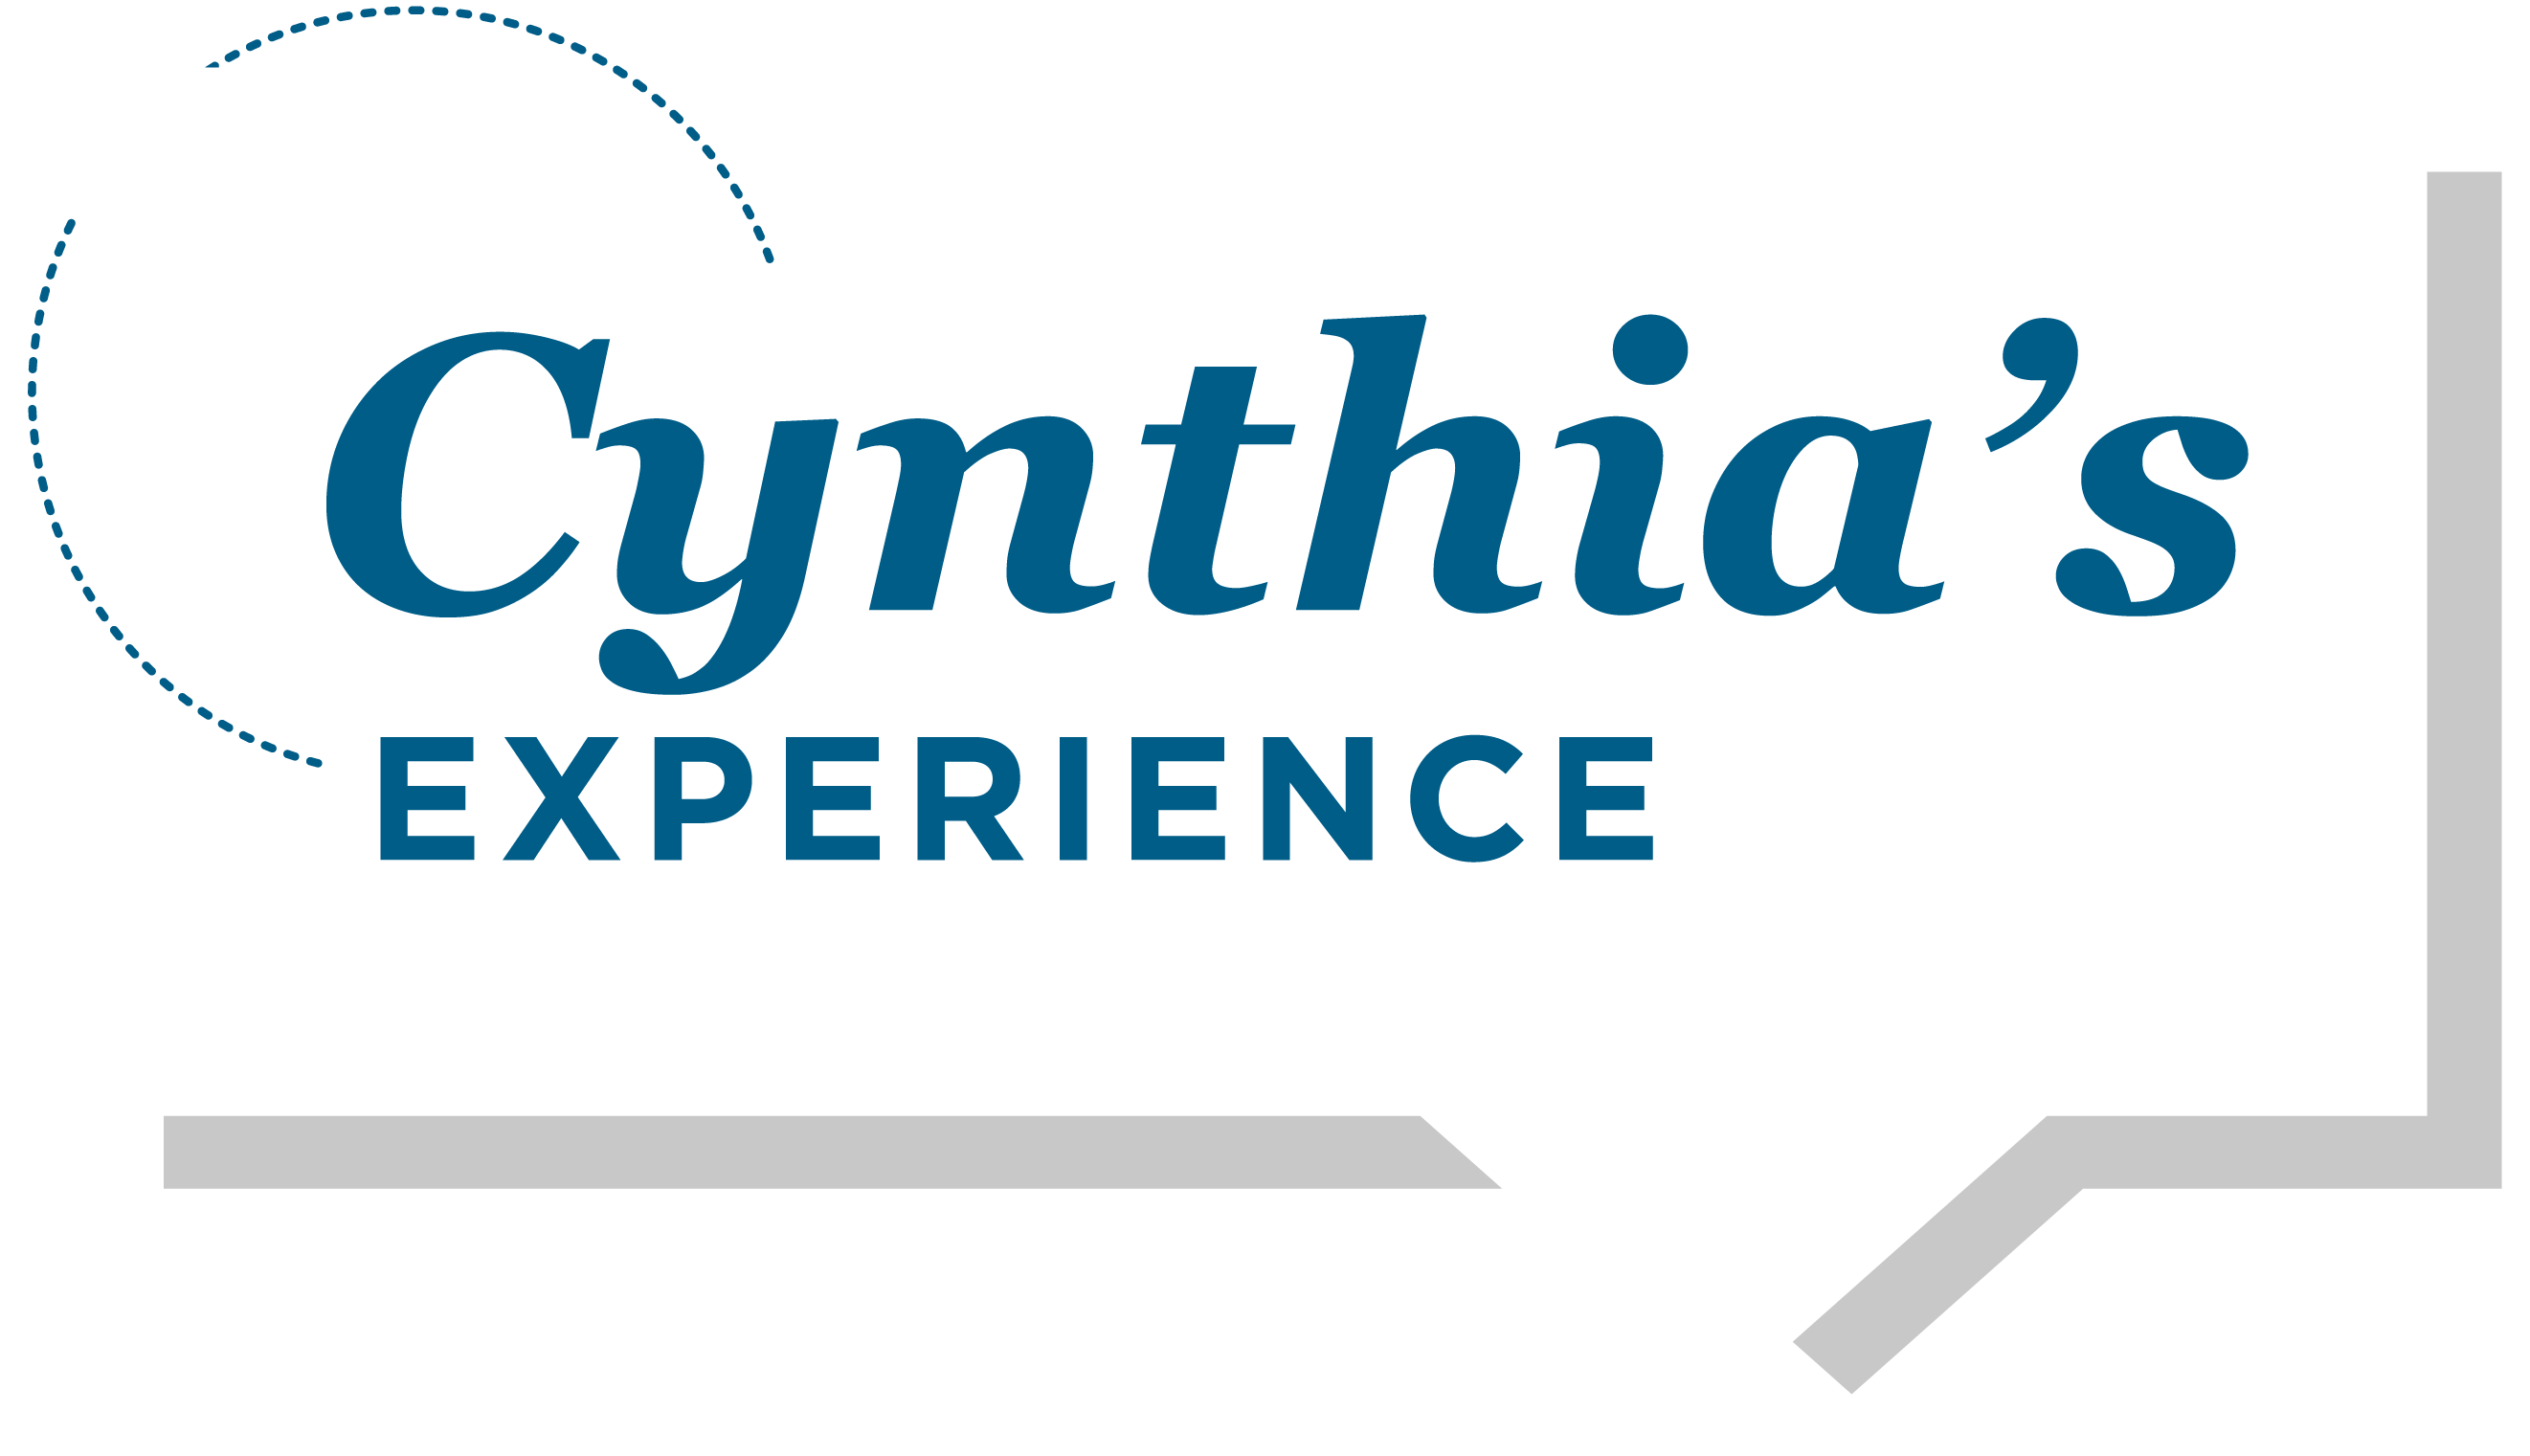 Cynthia's Experience